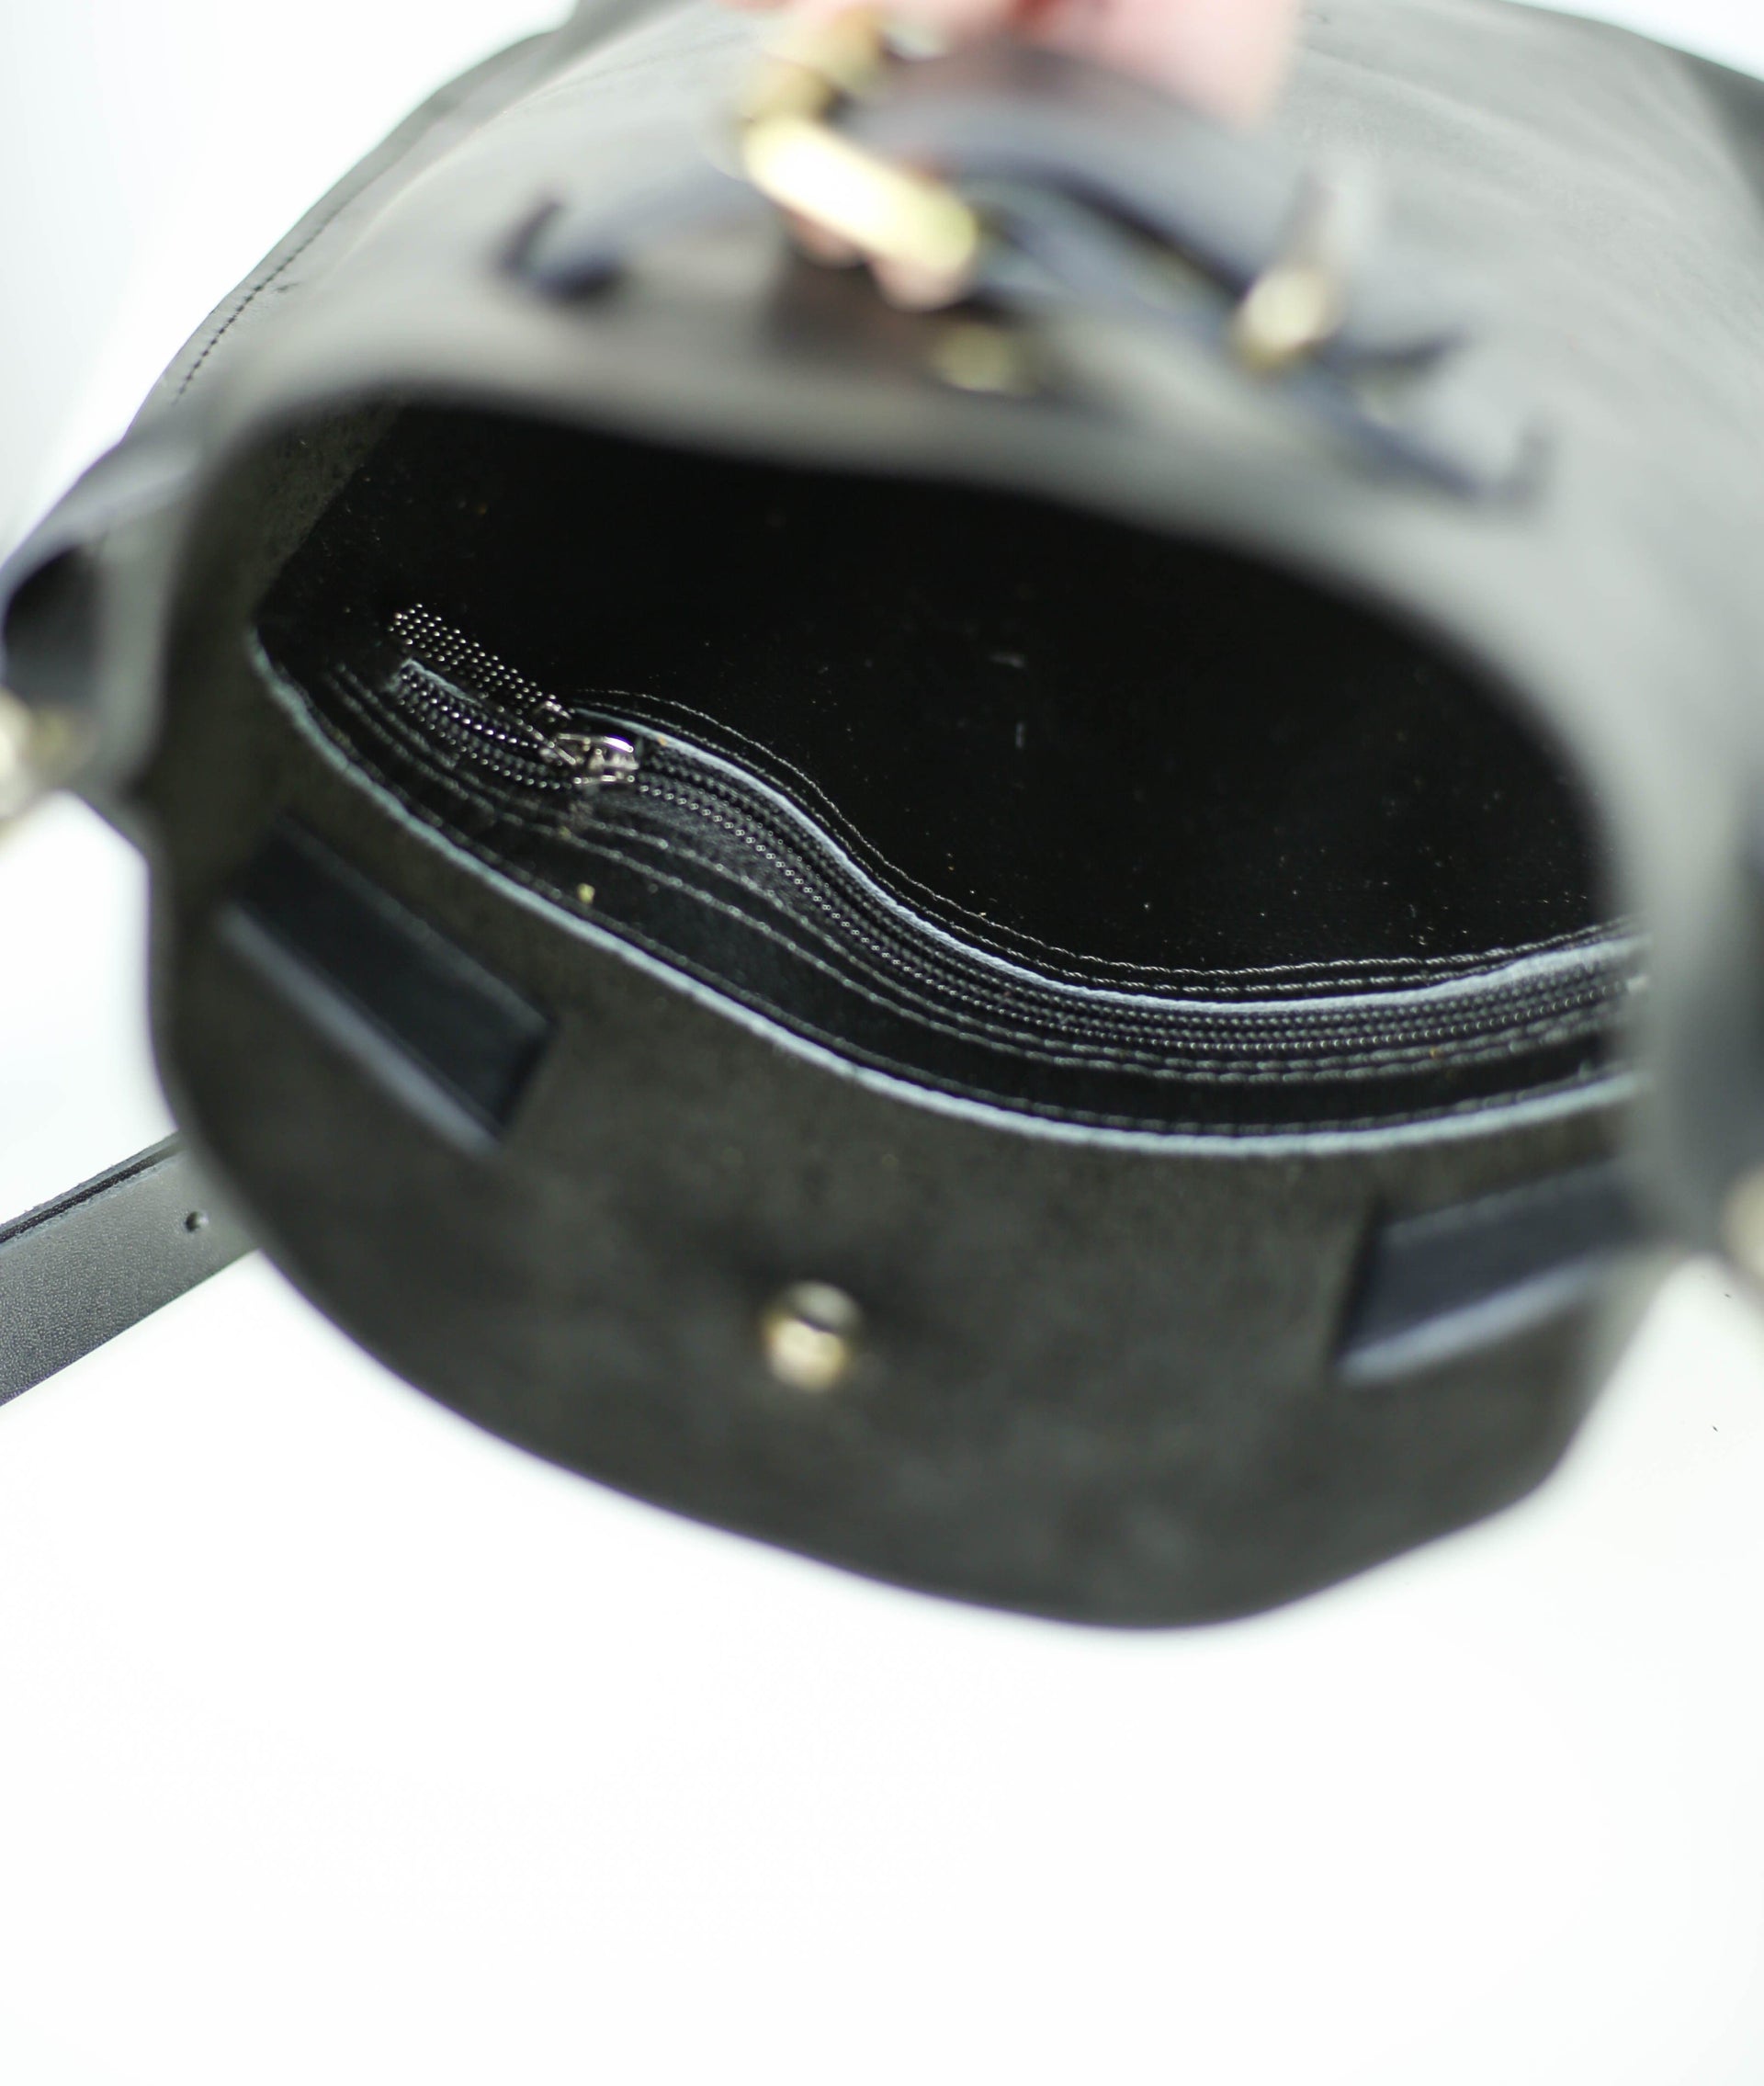 Interior of a black leather handbag